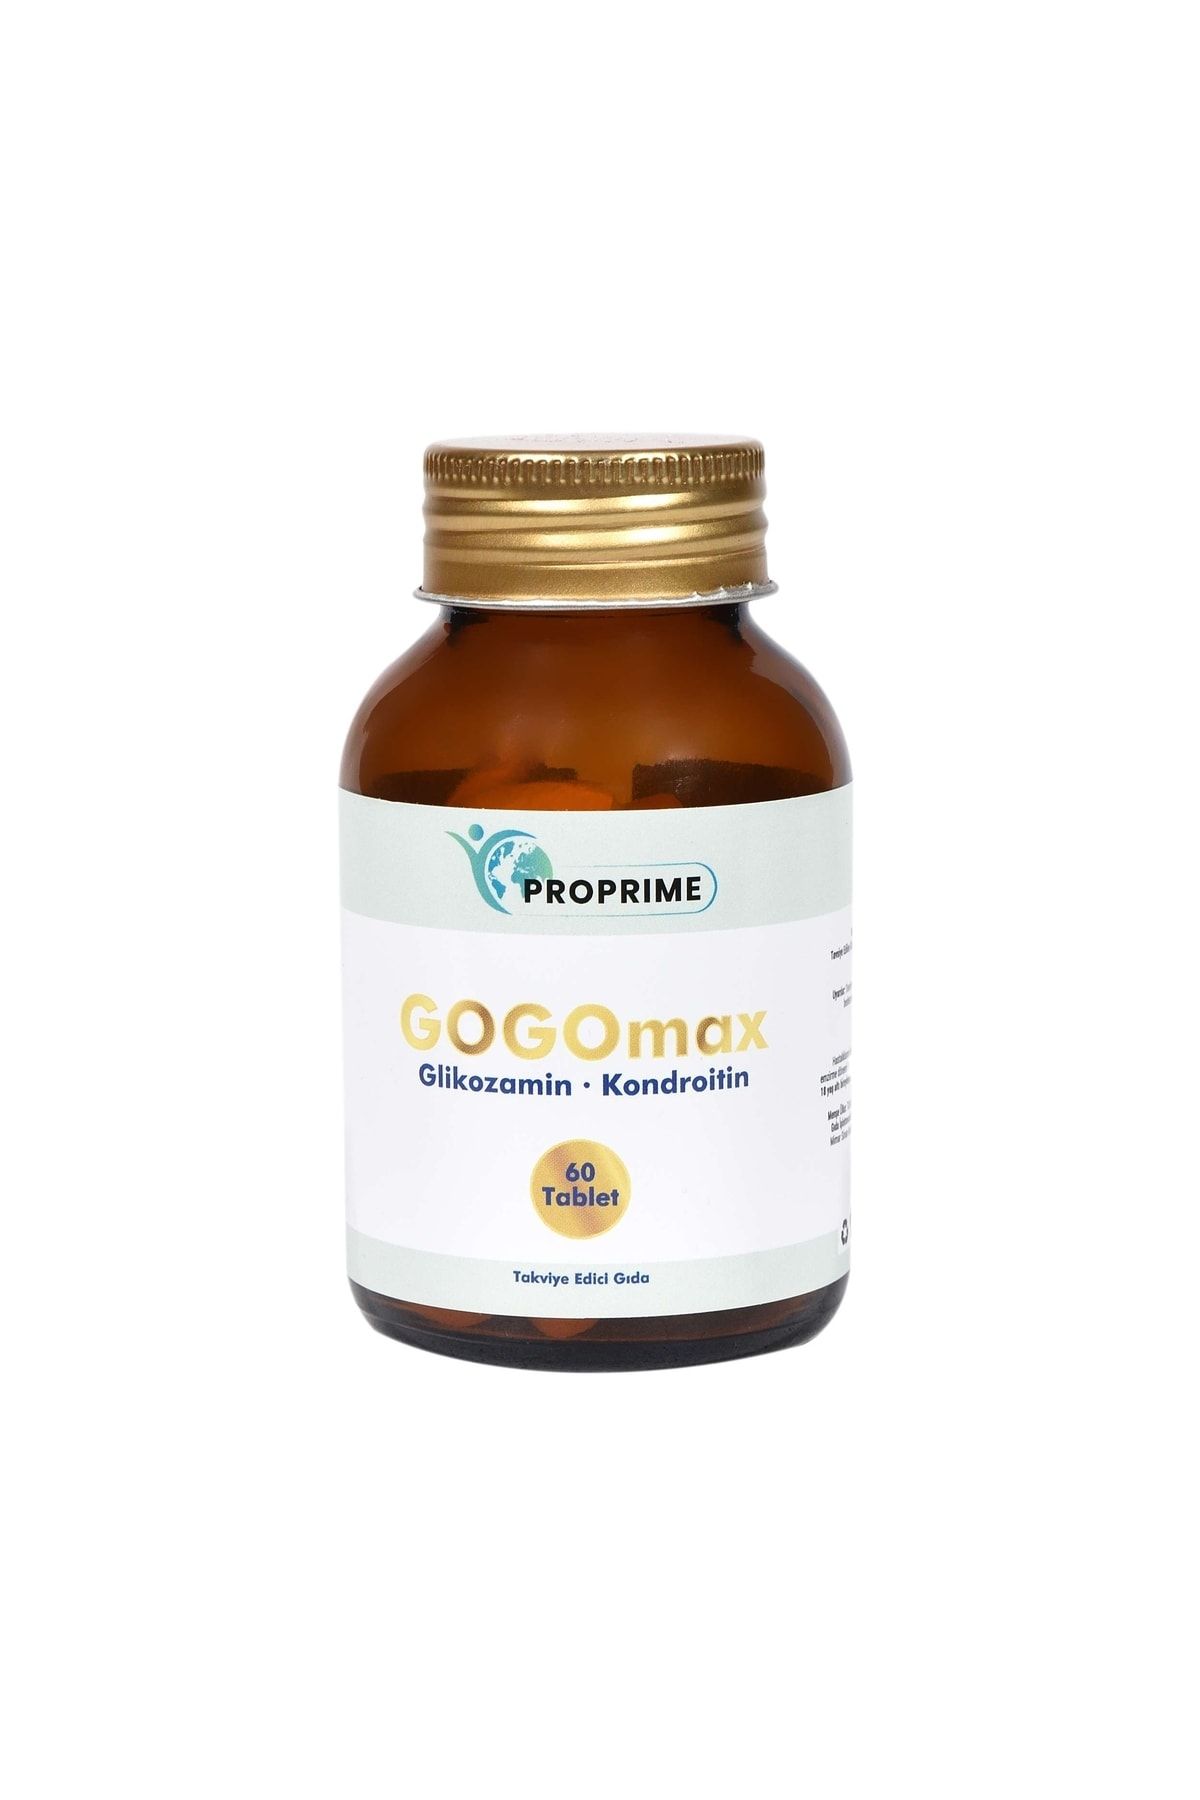 Proprime Gogomax-glukozamin,kondroitin Içeren Tak.edici Gıda